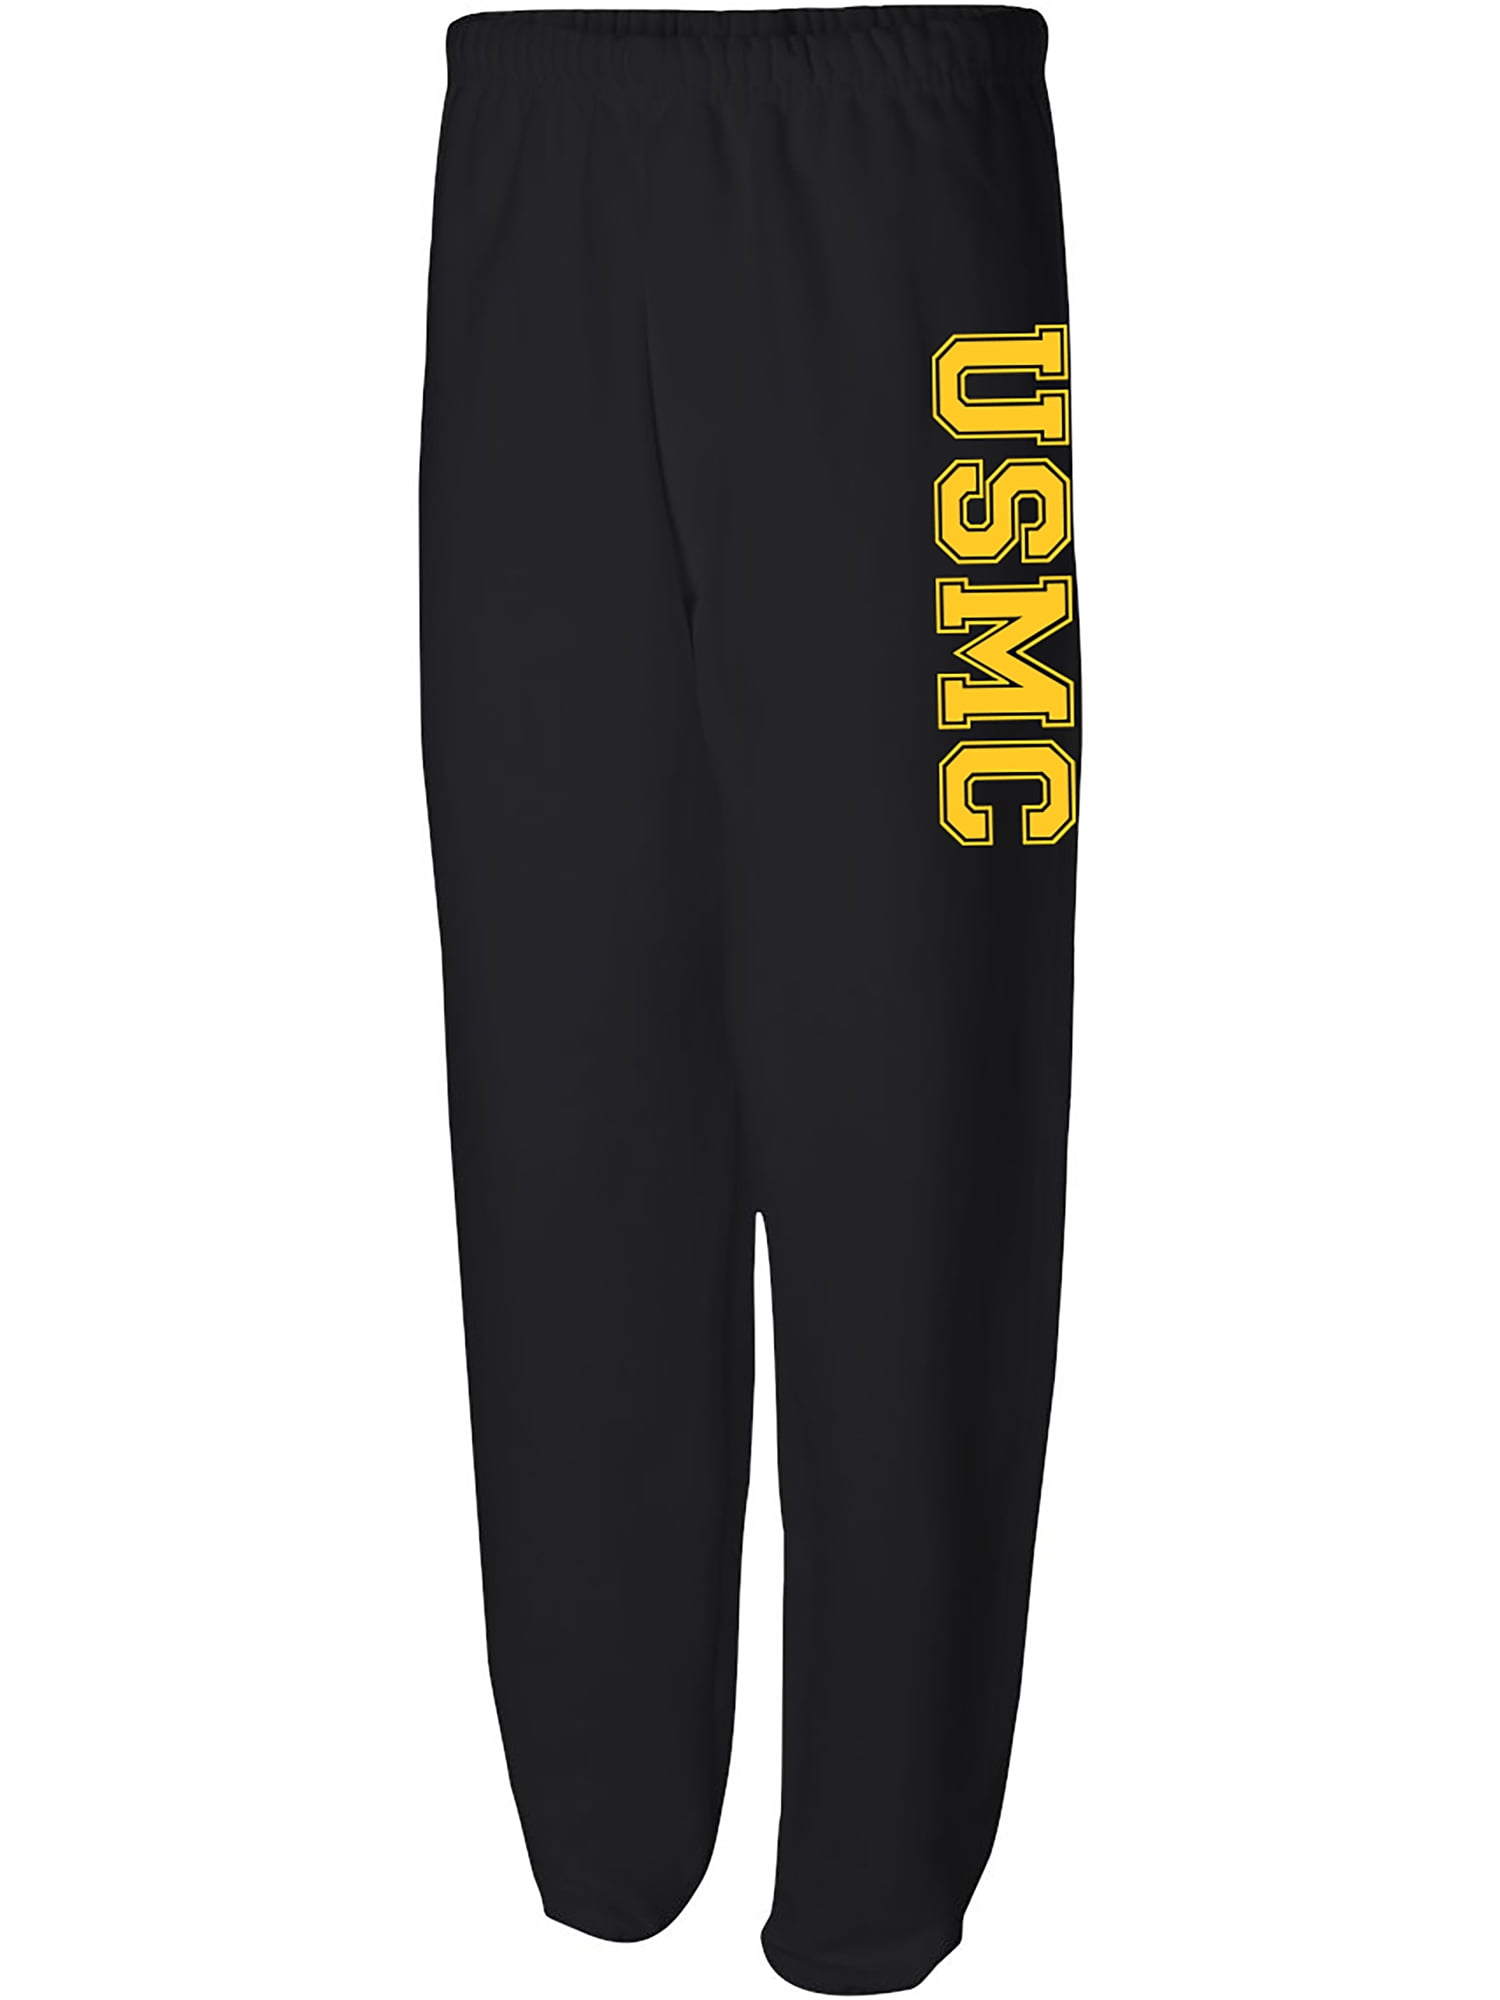 Athletic USMC Sweat Pants in Black - Walmart.com